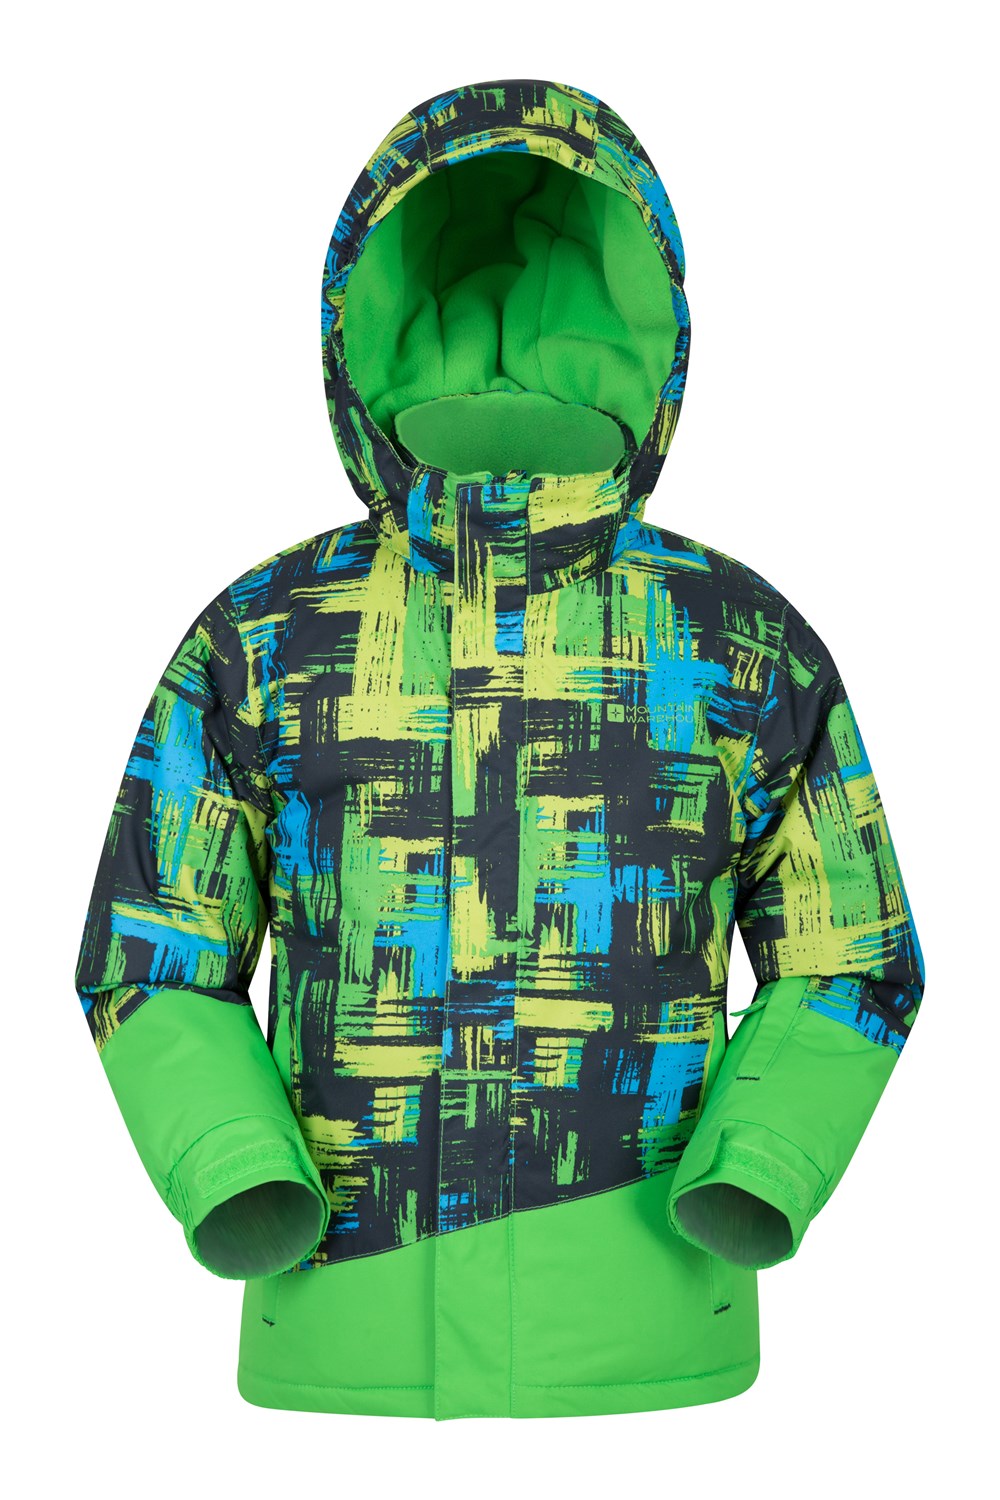 Downhill Kids Printed Ski Jacket | eBay